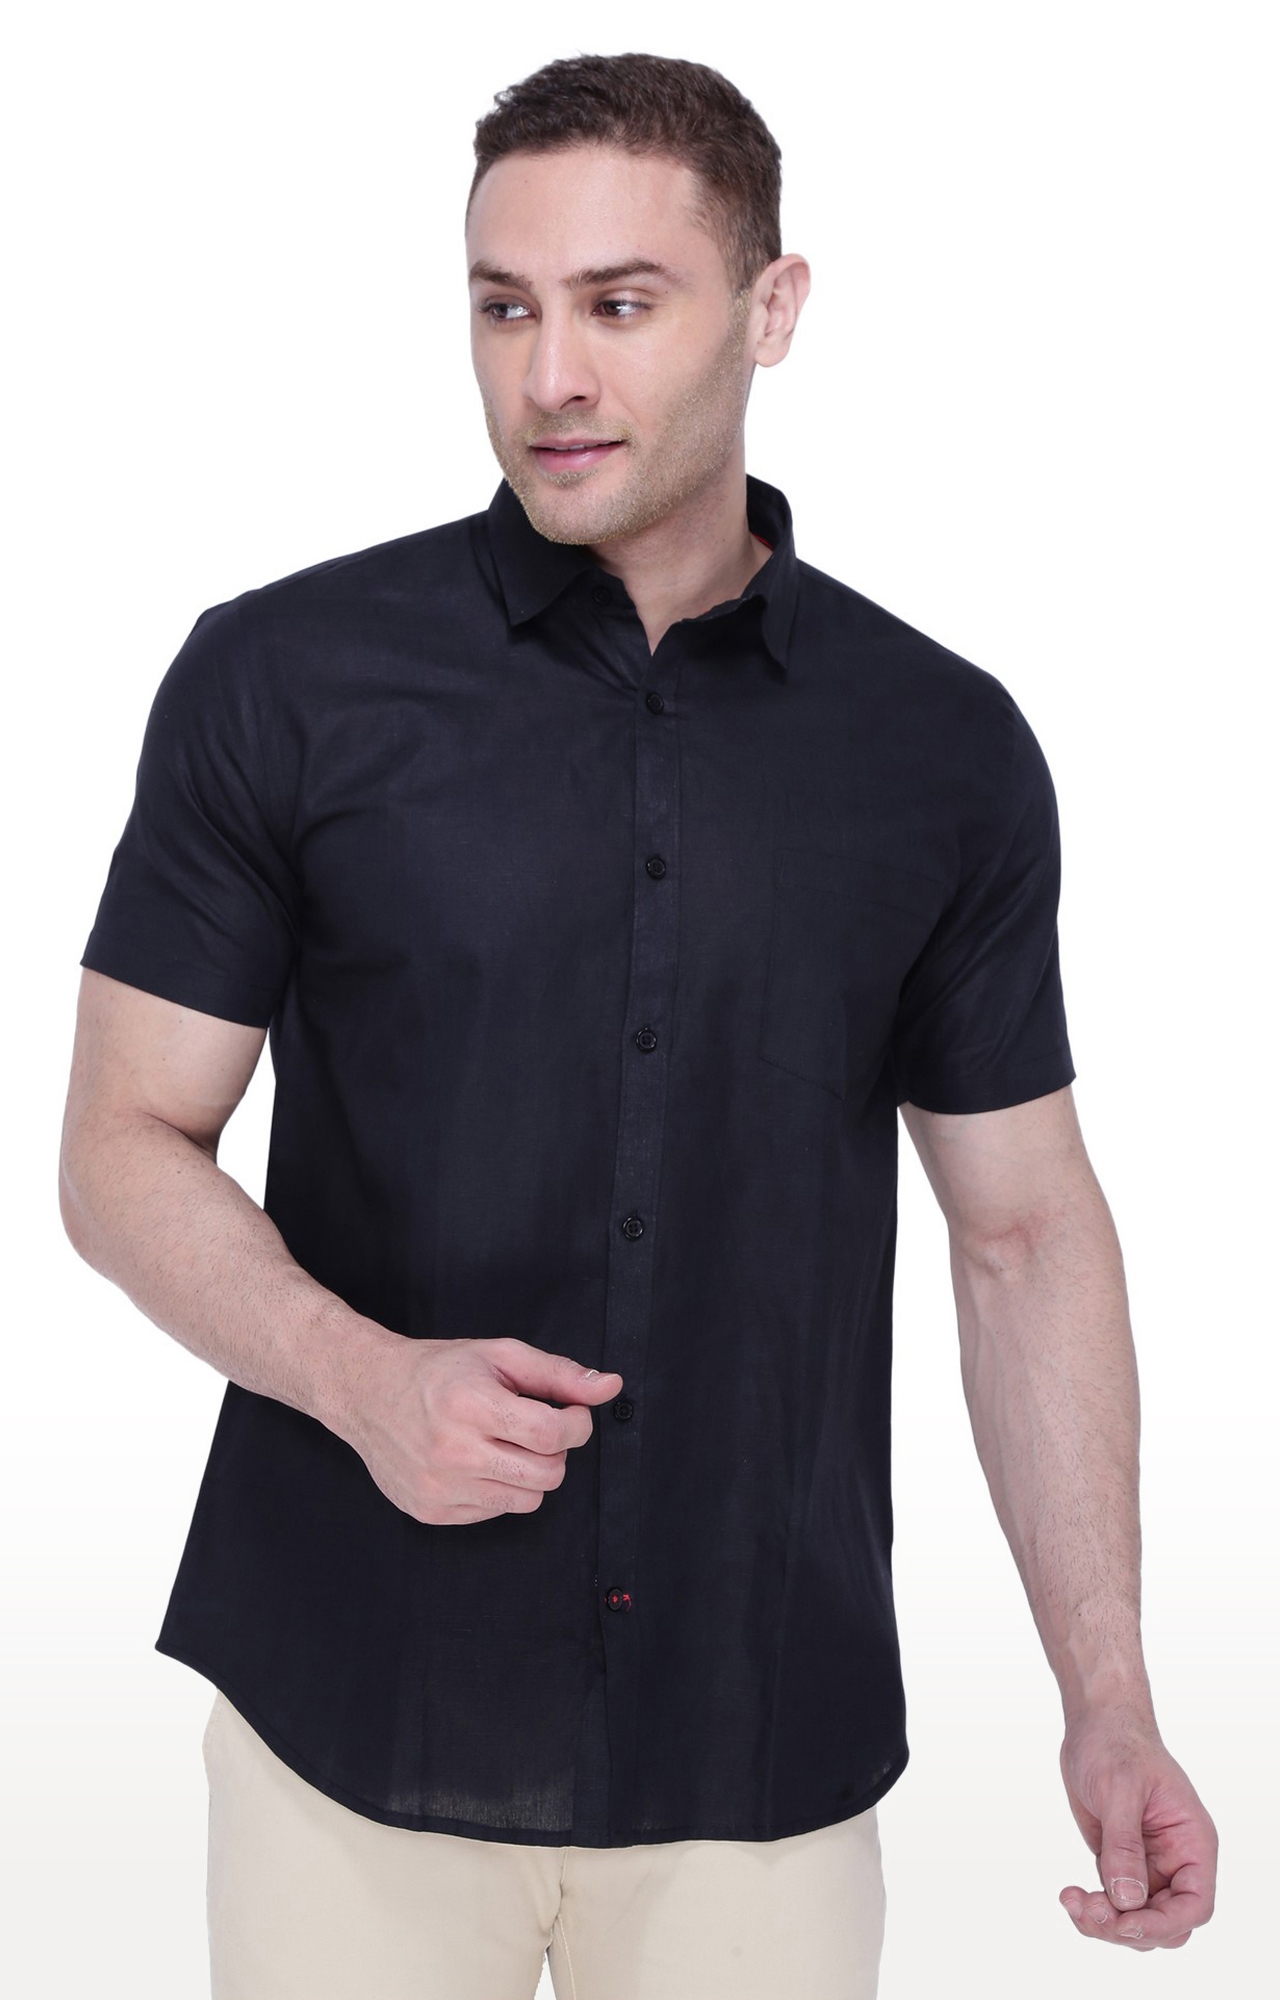 Southbay Men's Black Half Sleeve Linen Cotton Formal Shirt